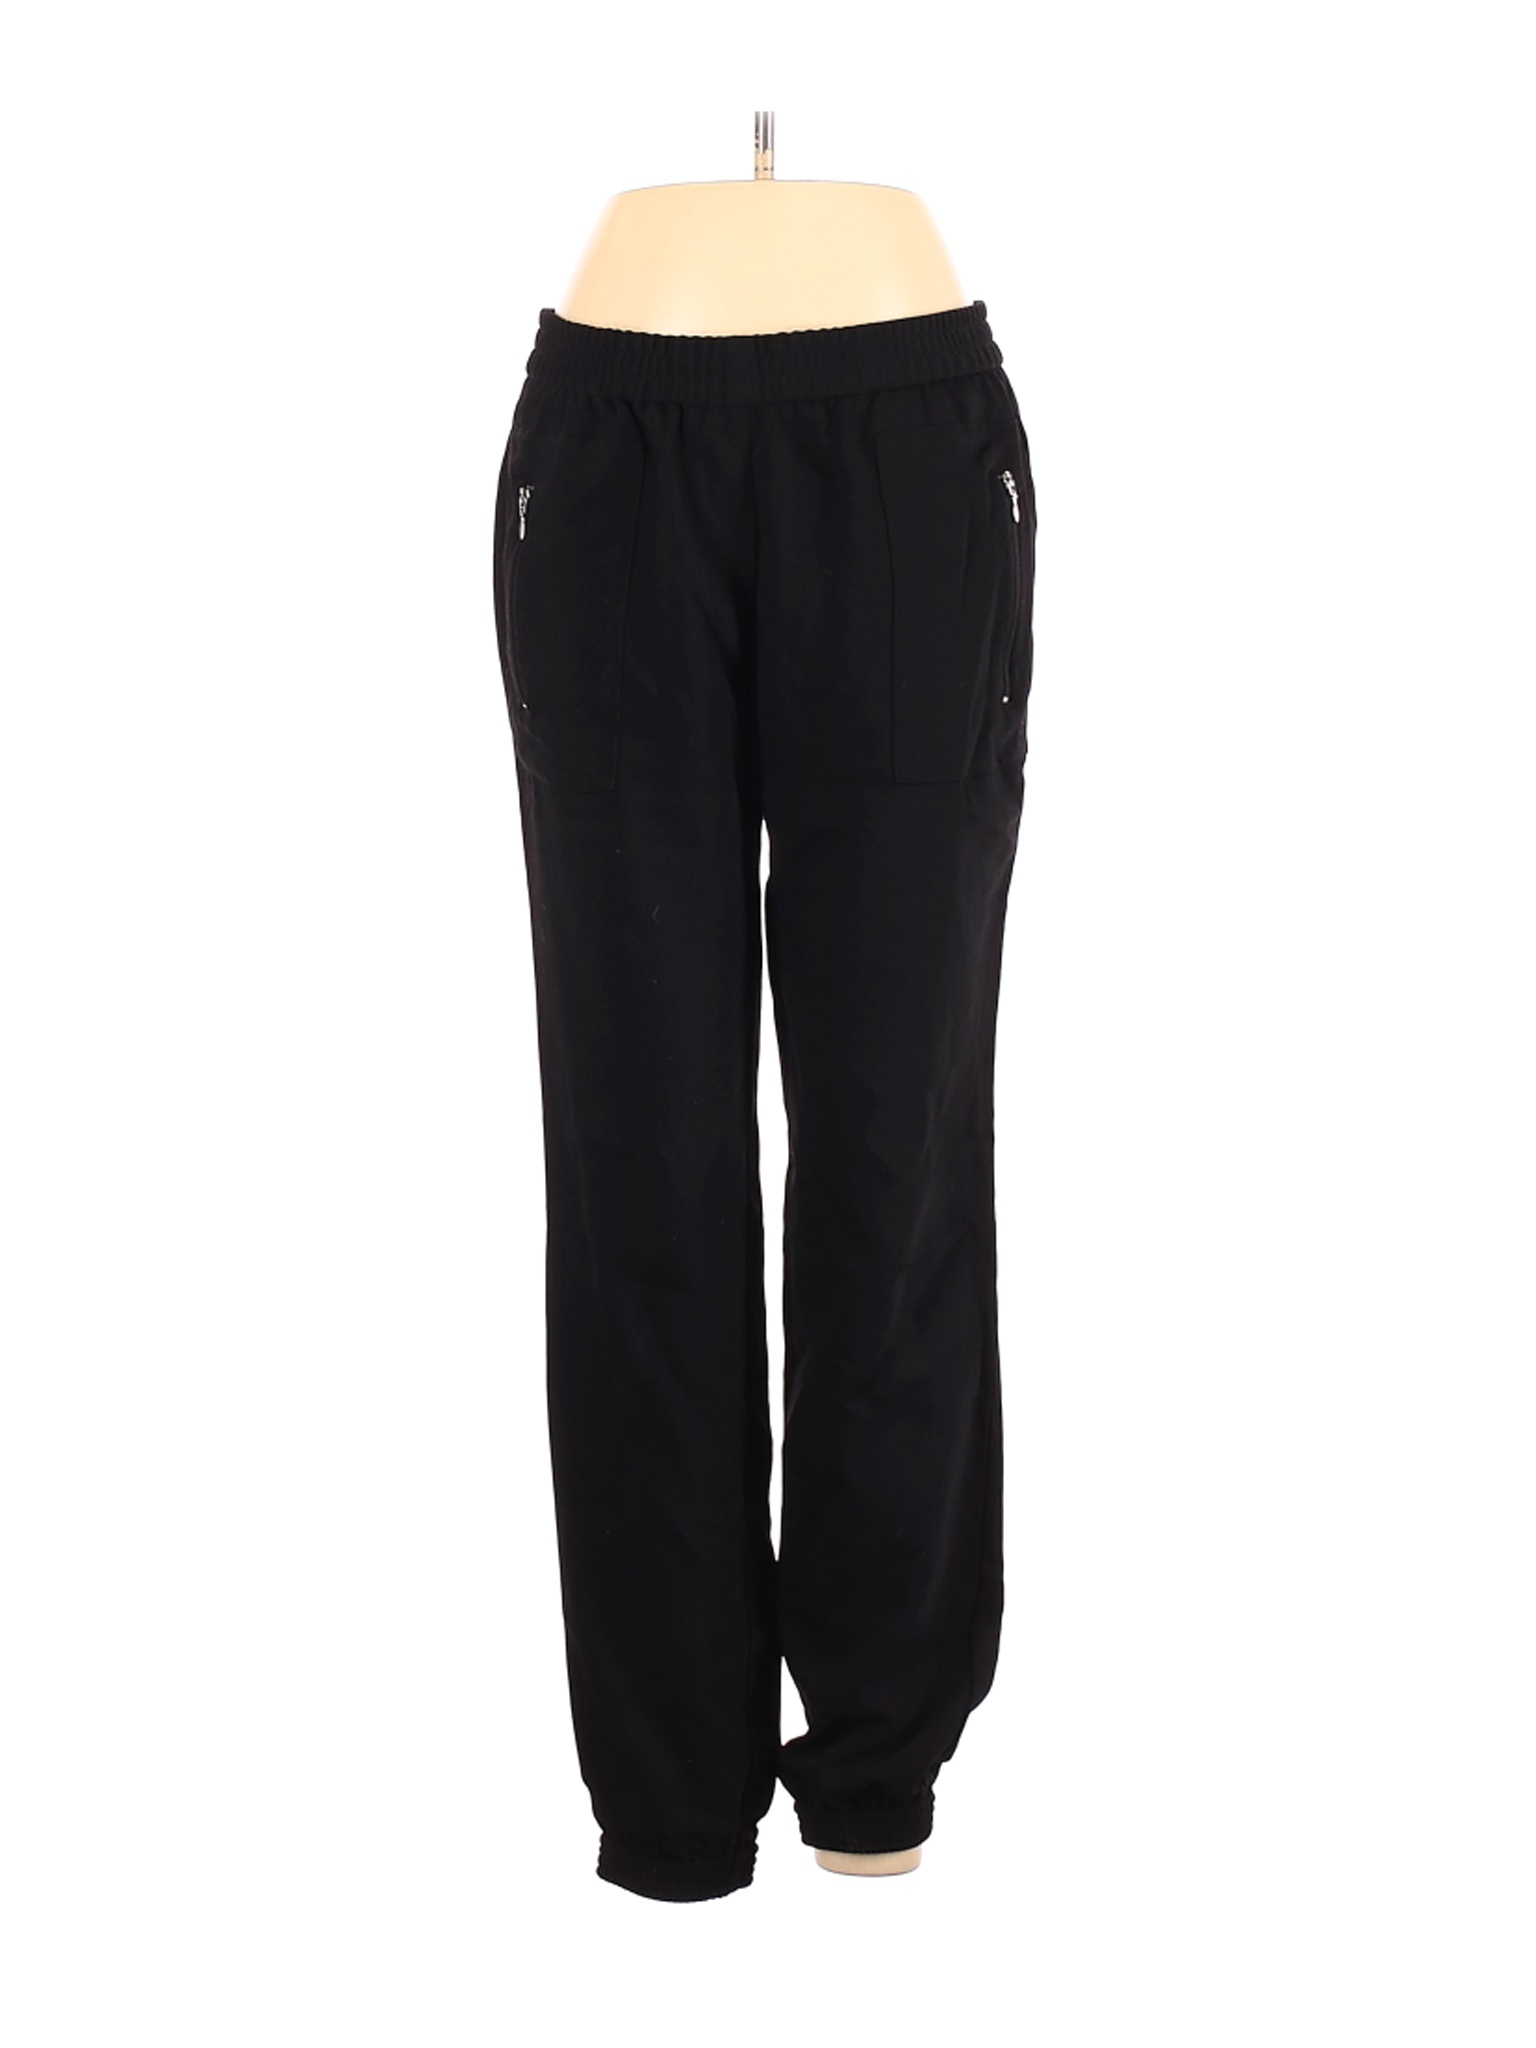 New York & Company Women Black Casual Pants S | eBay